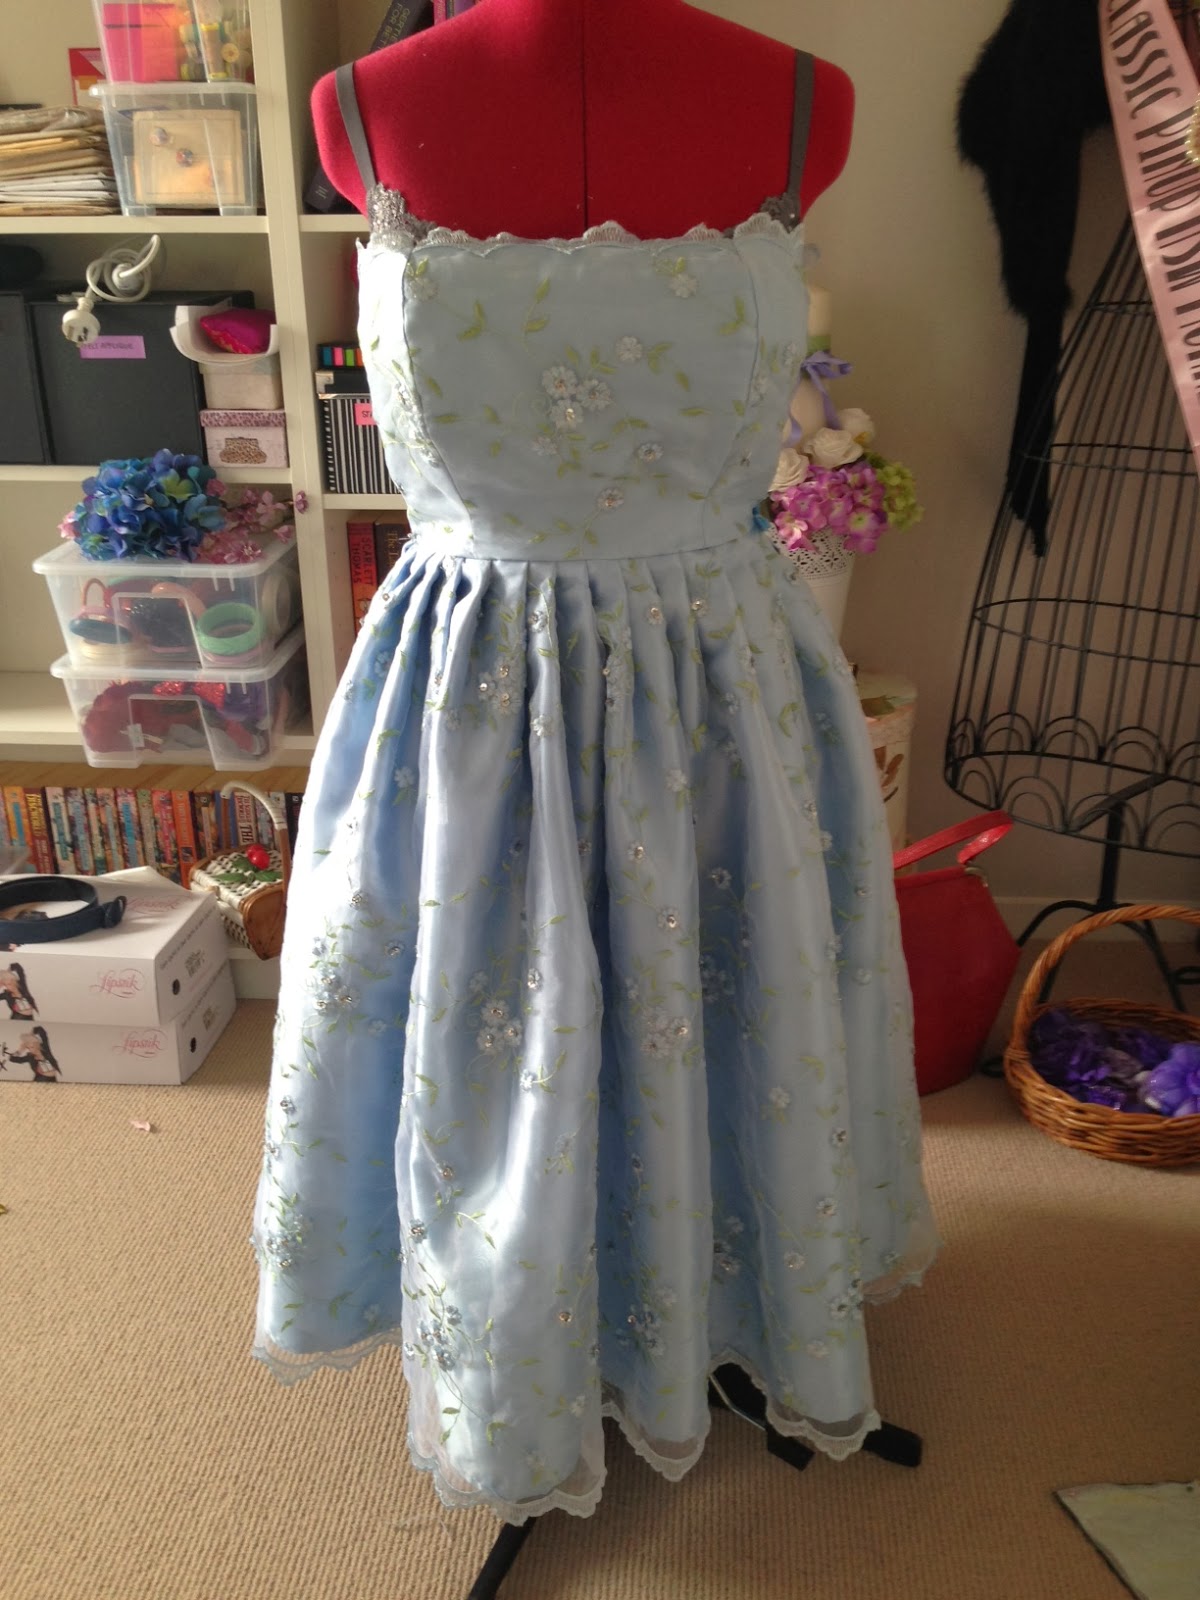 Sew Retro Rose: A Pretty Party Dress for a Wedding